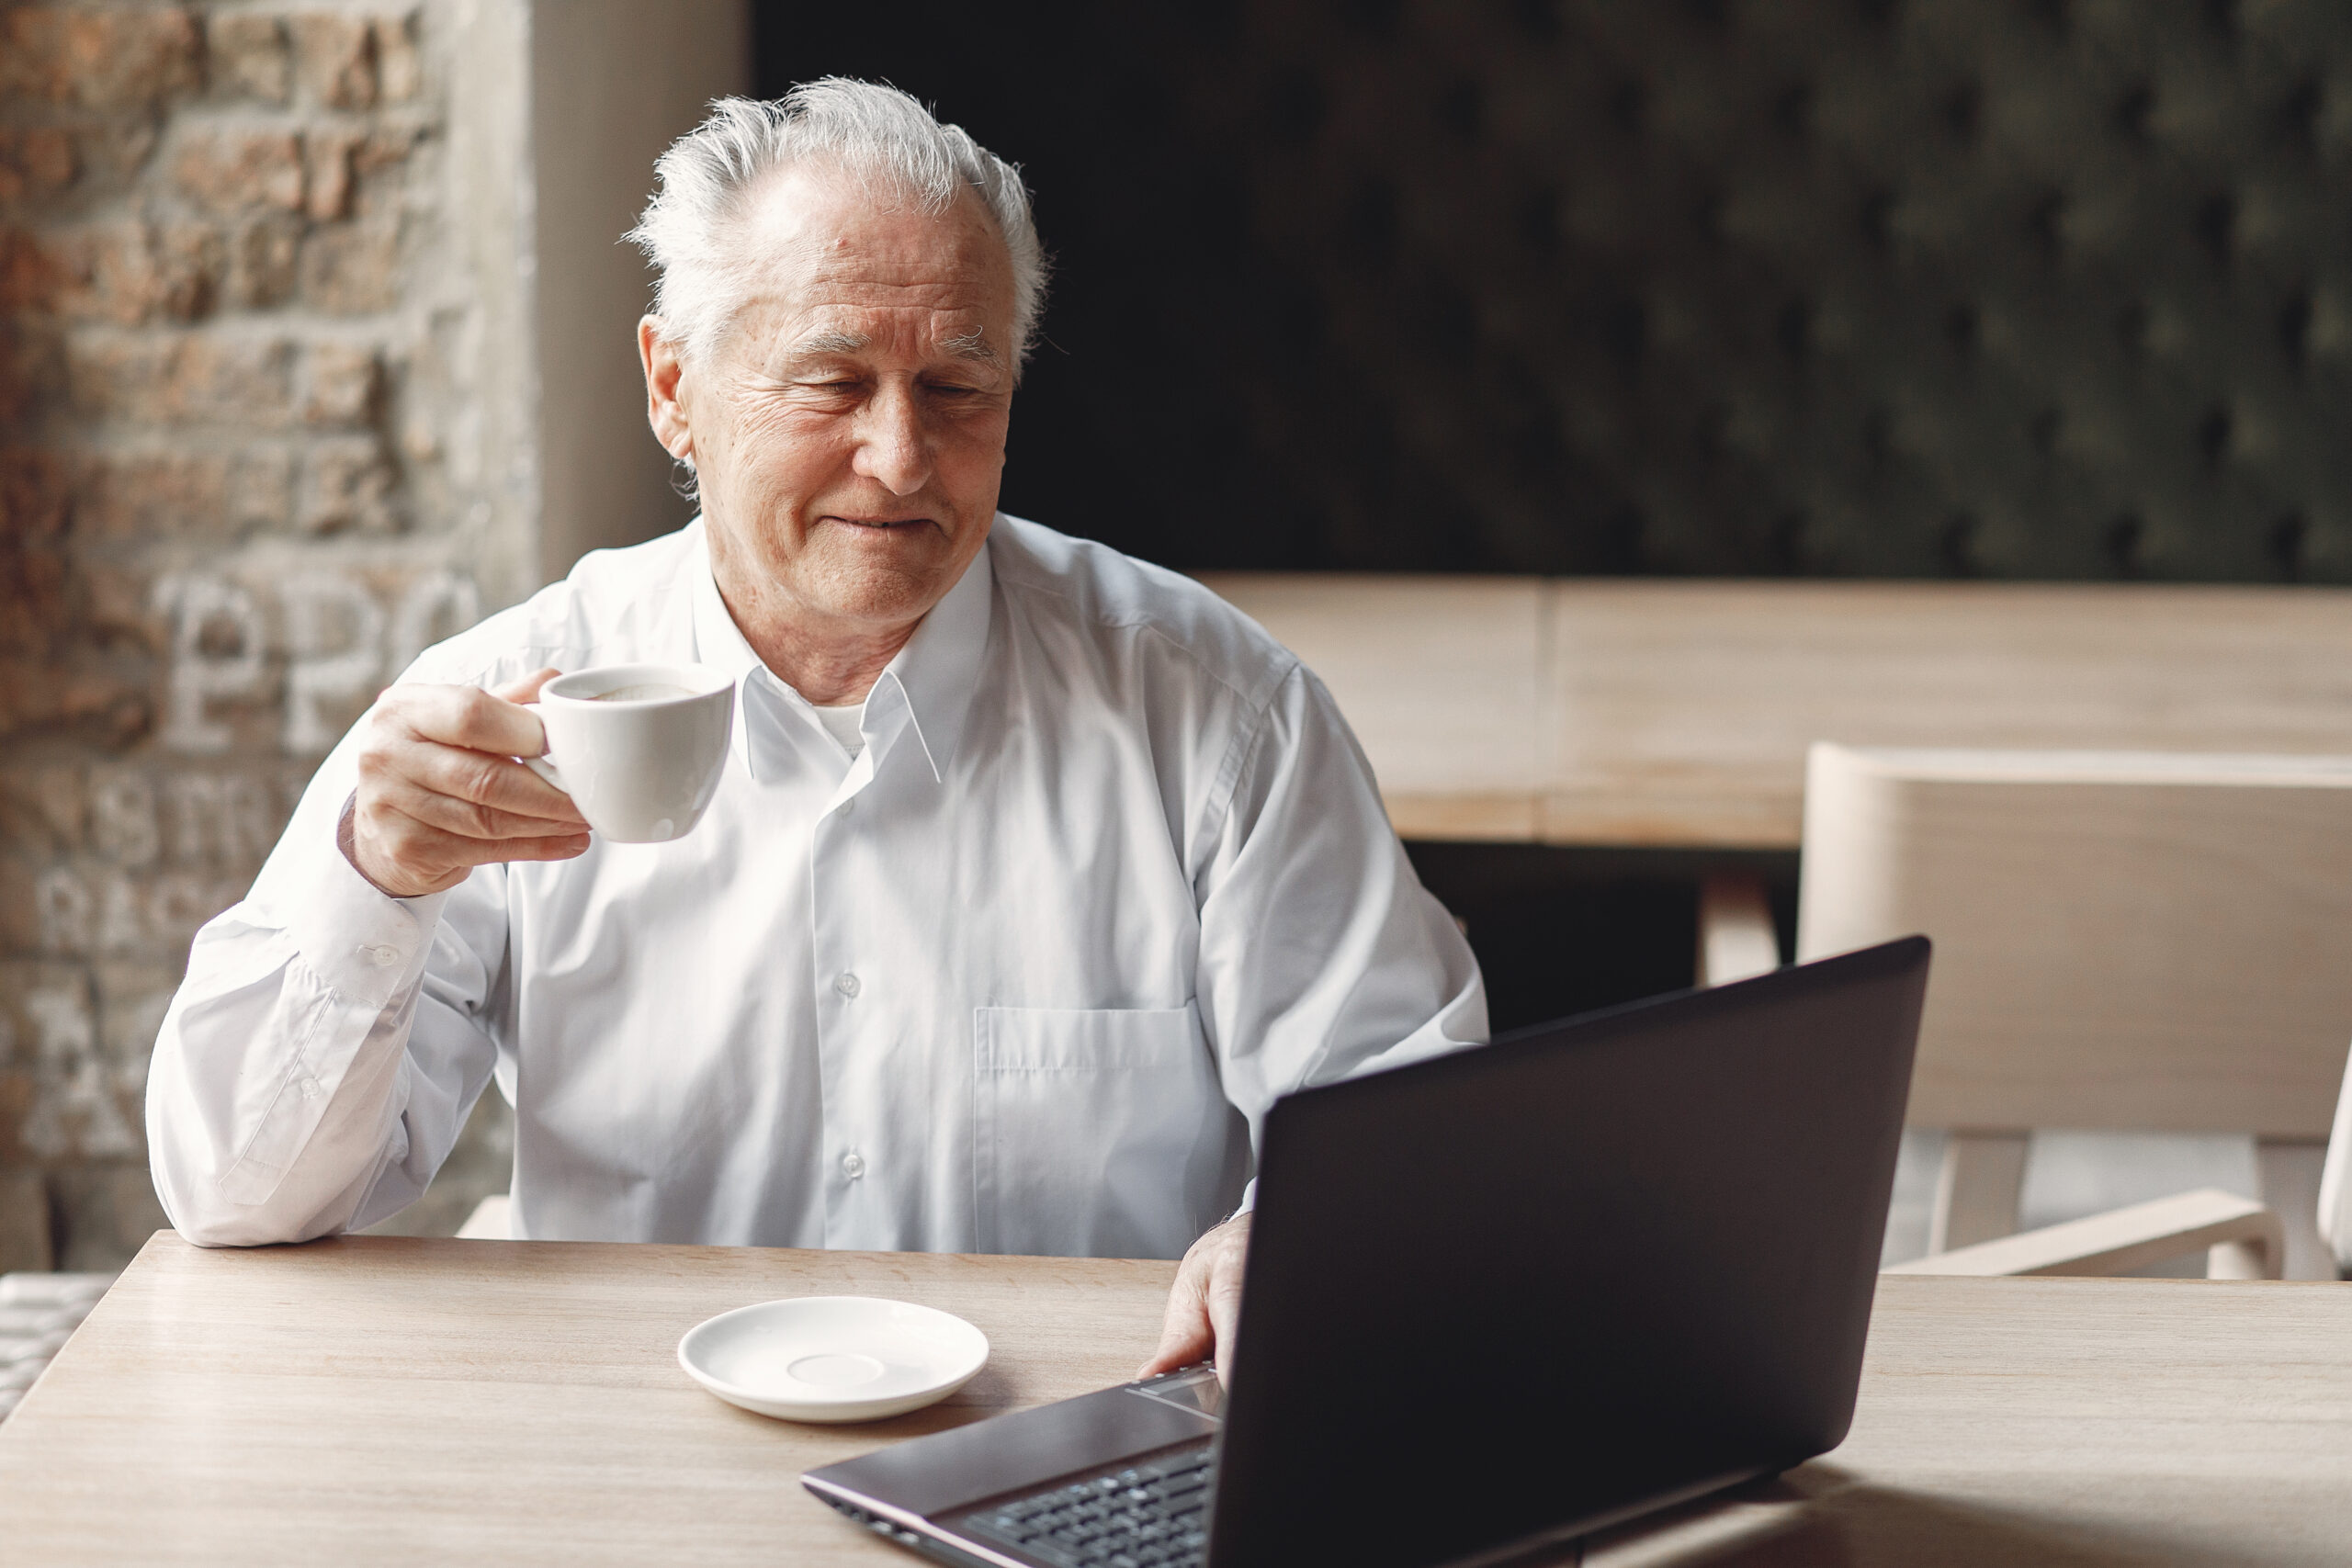 Мужчина пенсионер сидит за компьютером и пьет чашку кофе во время занятия хобби